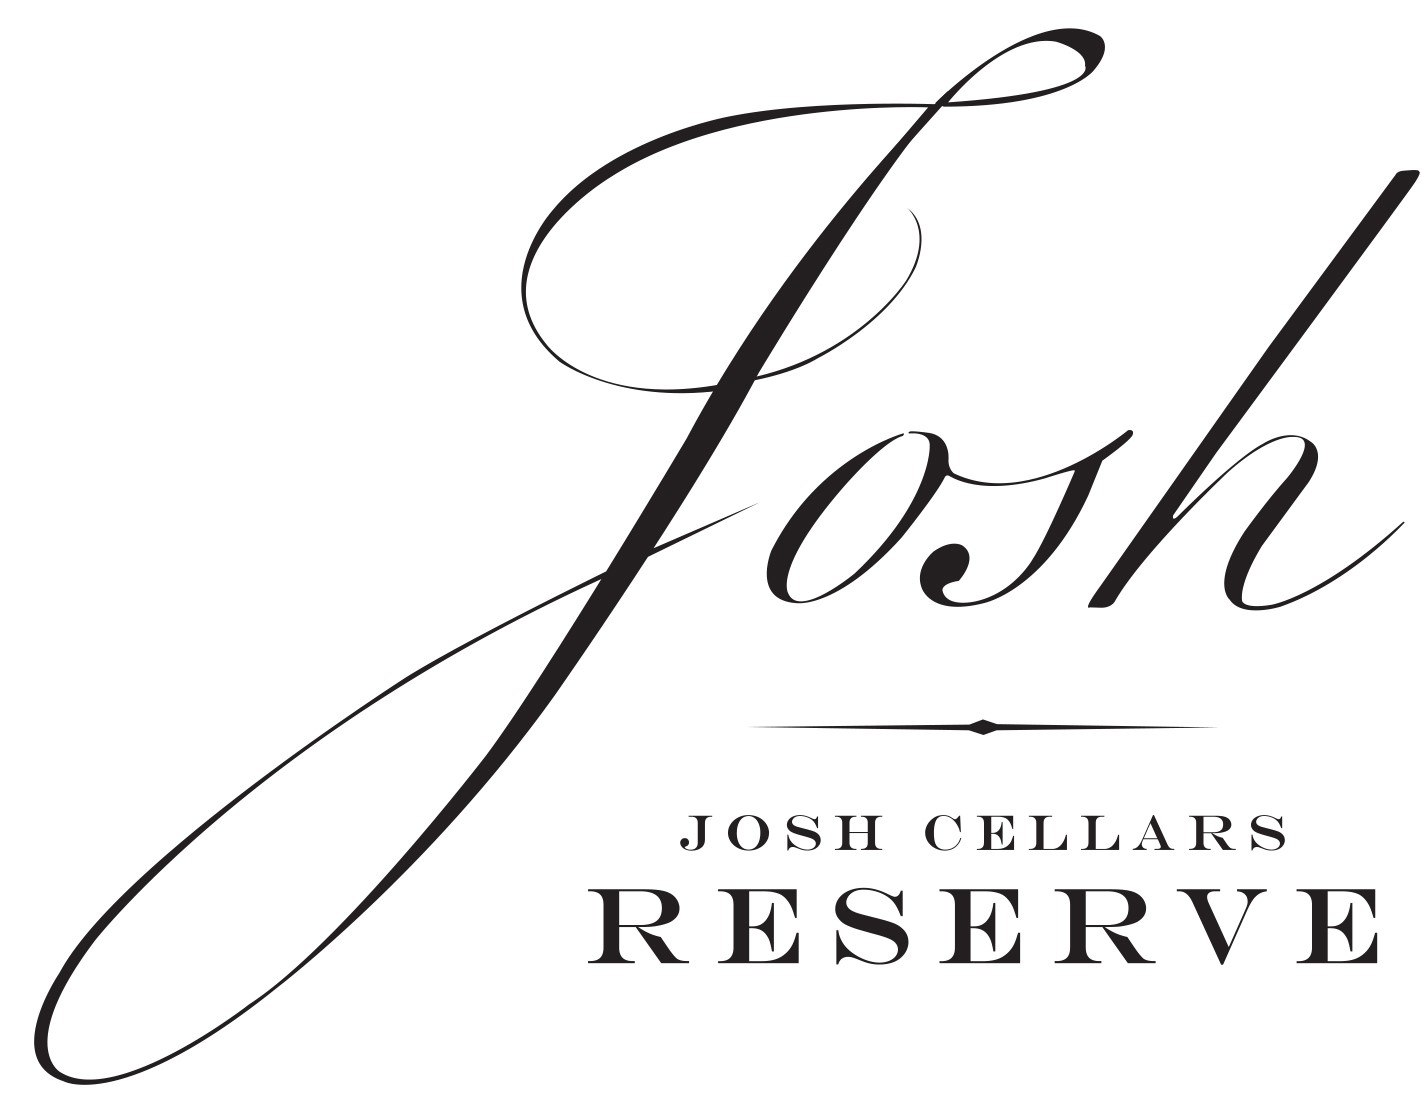 Josh Cellars Reserve